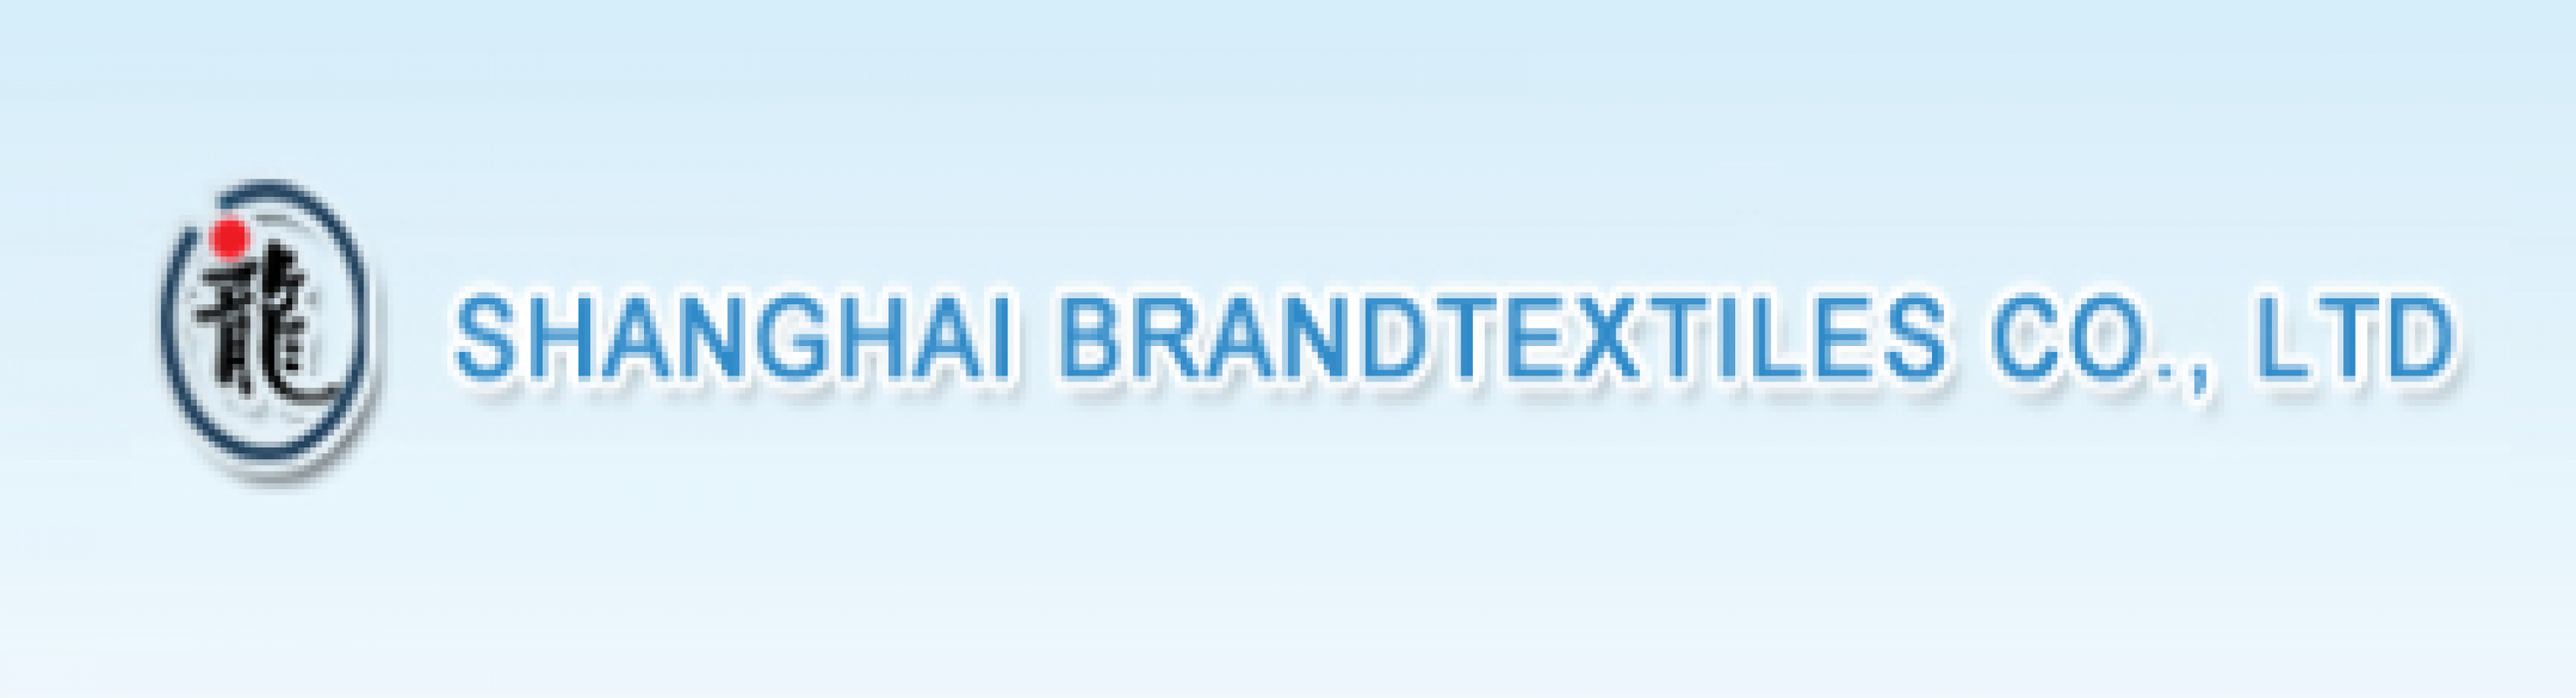 SHANGHAI BRANDTEXTILES CO., LTD.